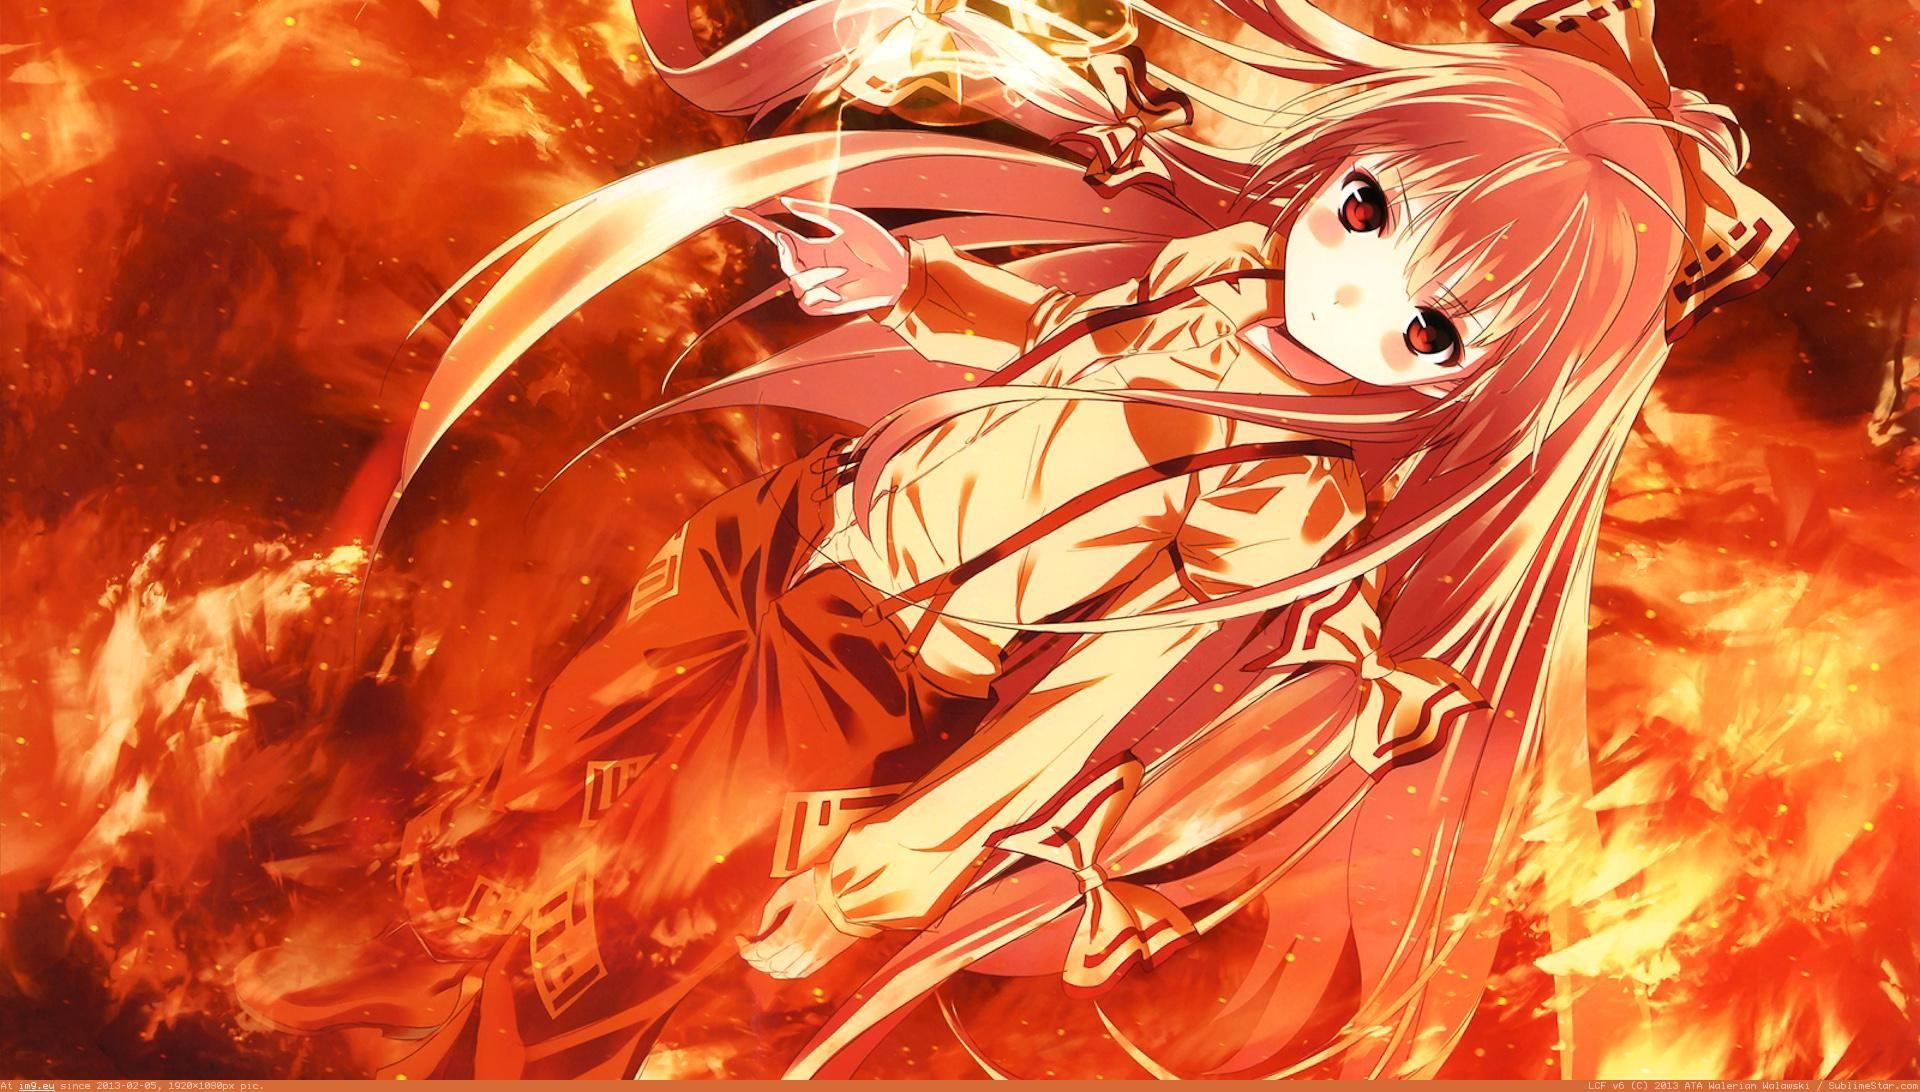 22+] Anime Fire Dragon Wallpapers - WallpaperSafari